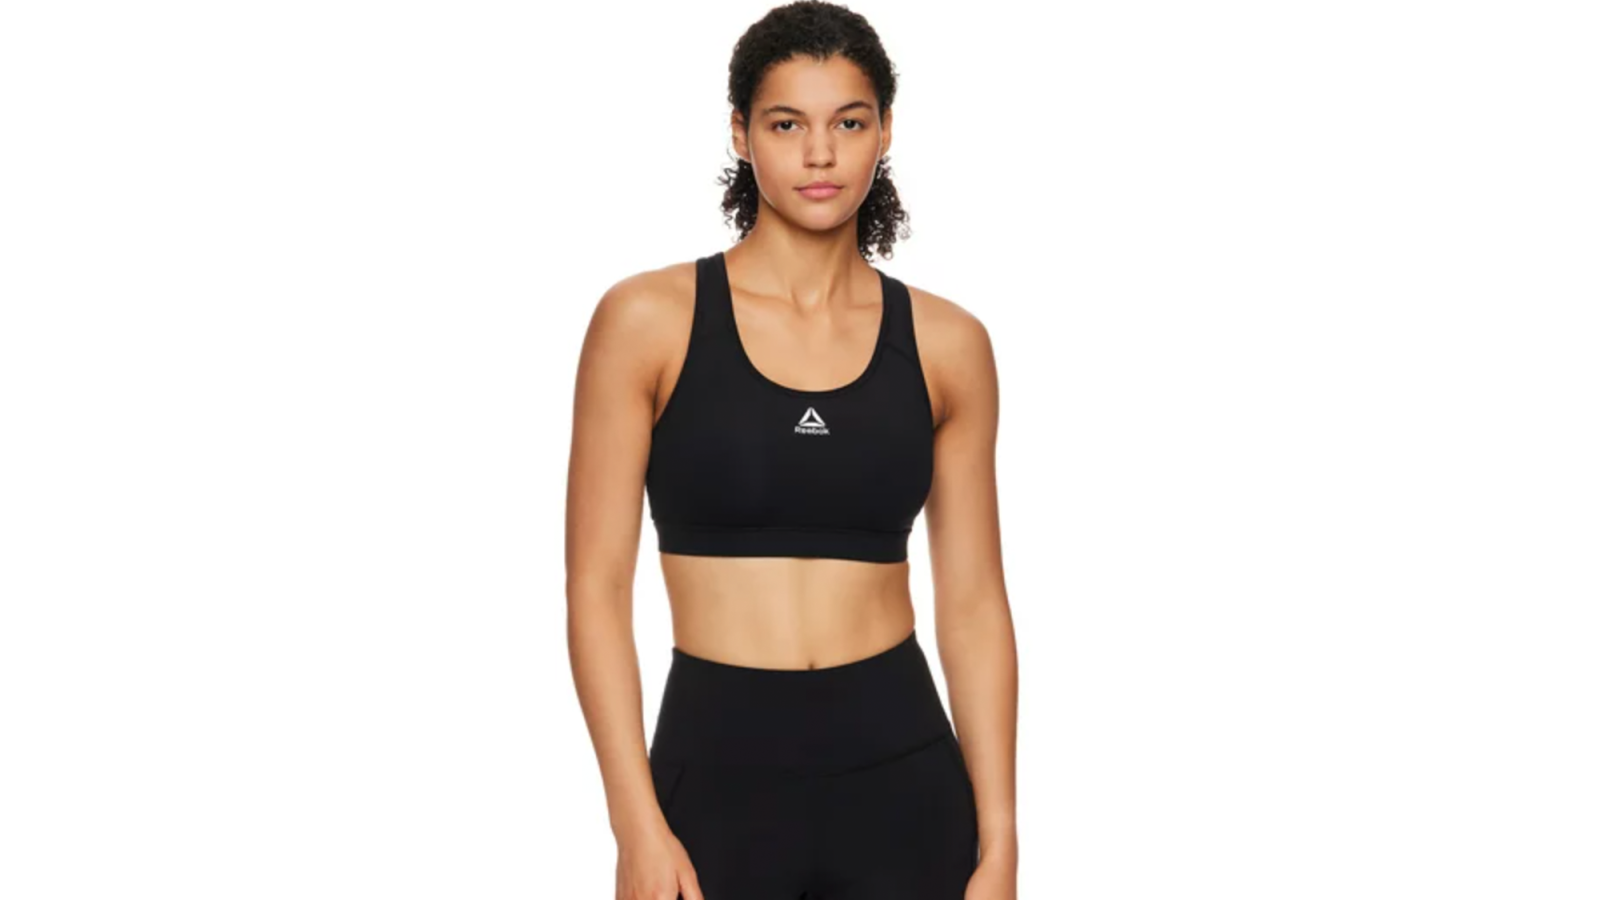 Women's Fitness High Support Sports Bra - 900 Black - black, black